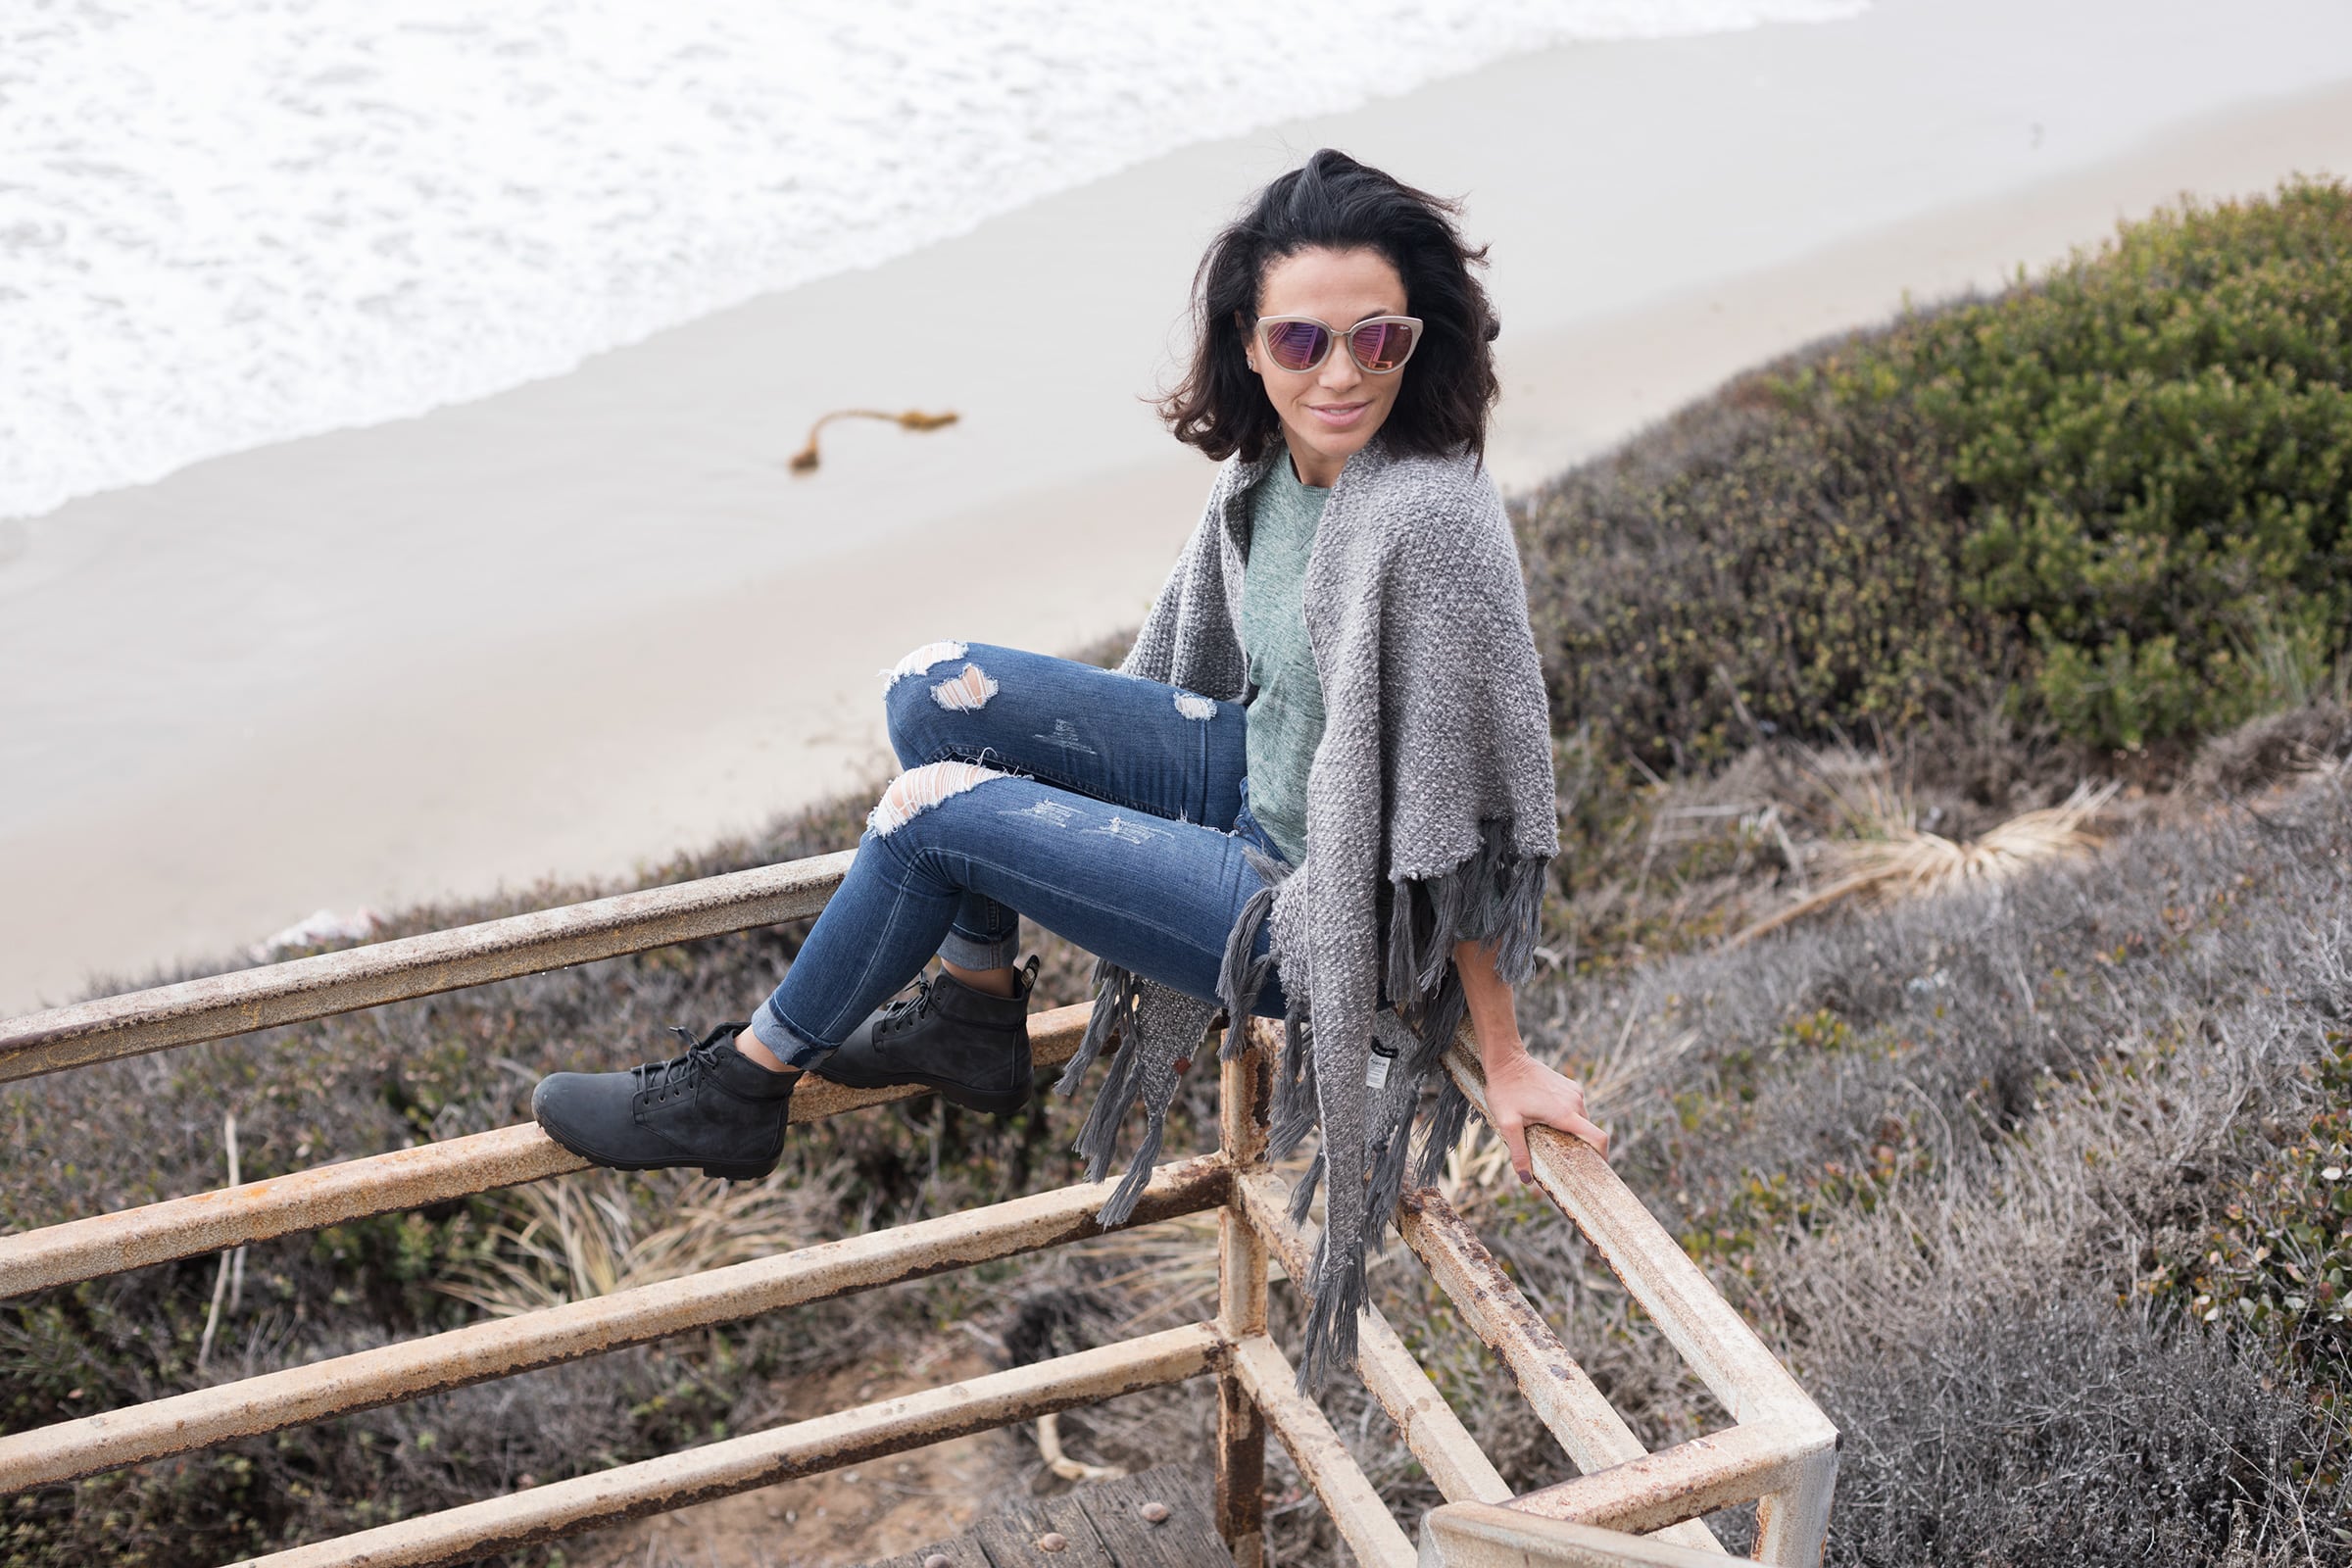 Sponsored: #HowIRoam with Blundstone | Aida Mollenkamp at El Matador Beach, Malibu | @saltandwind